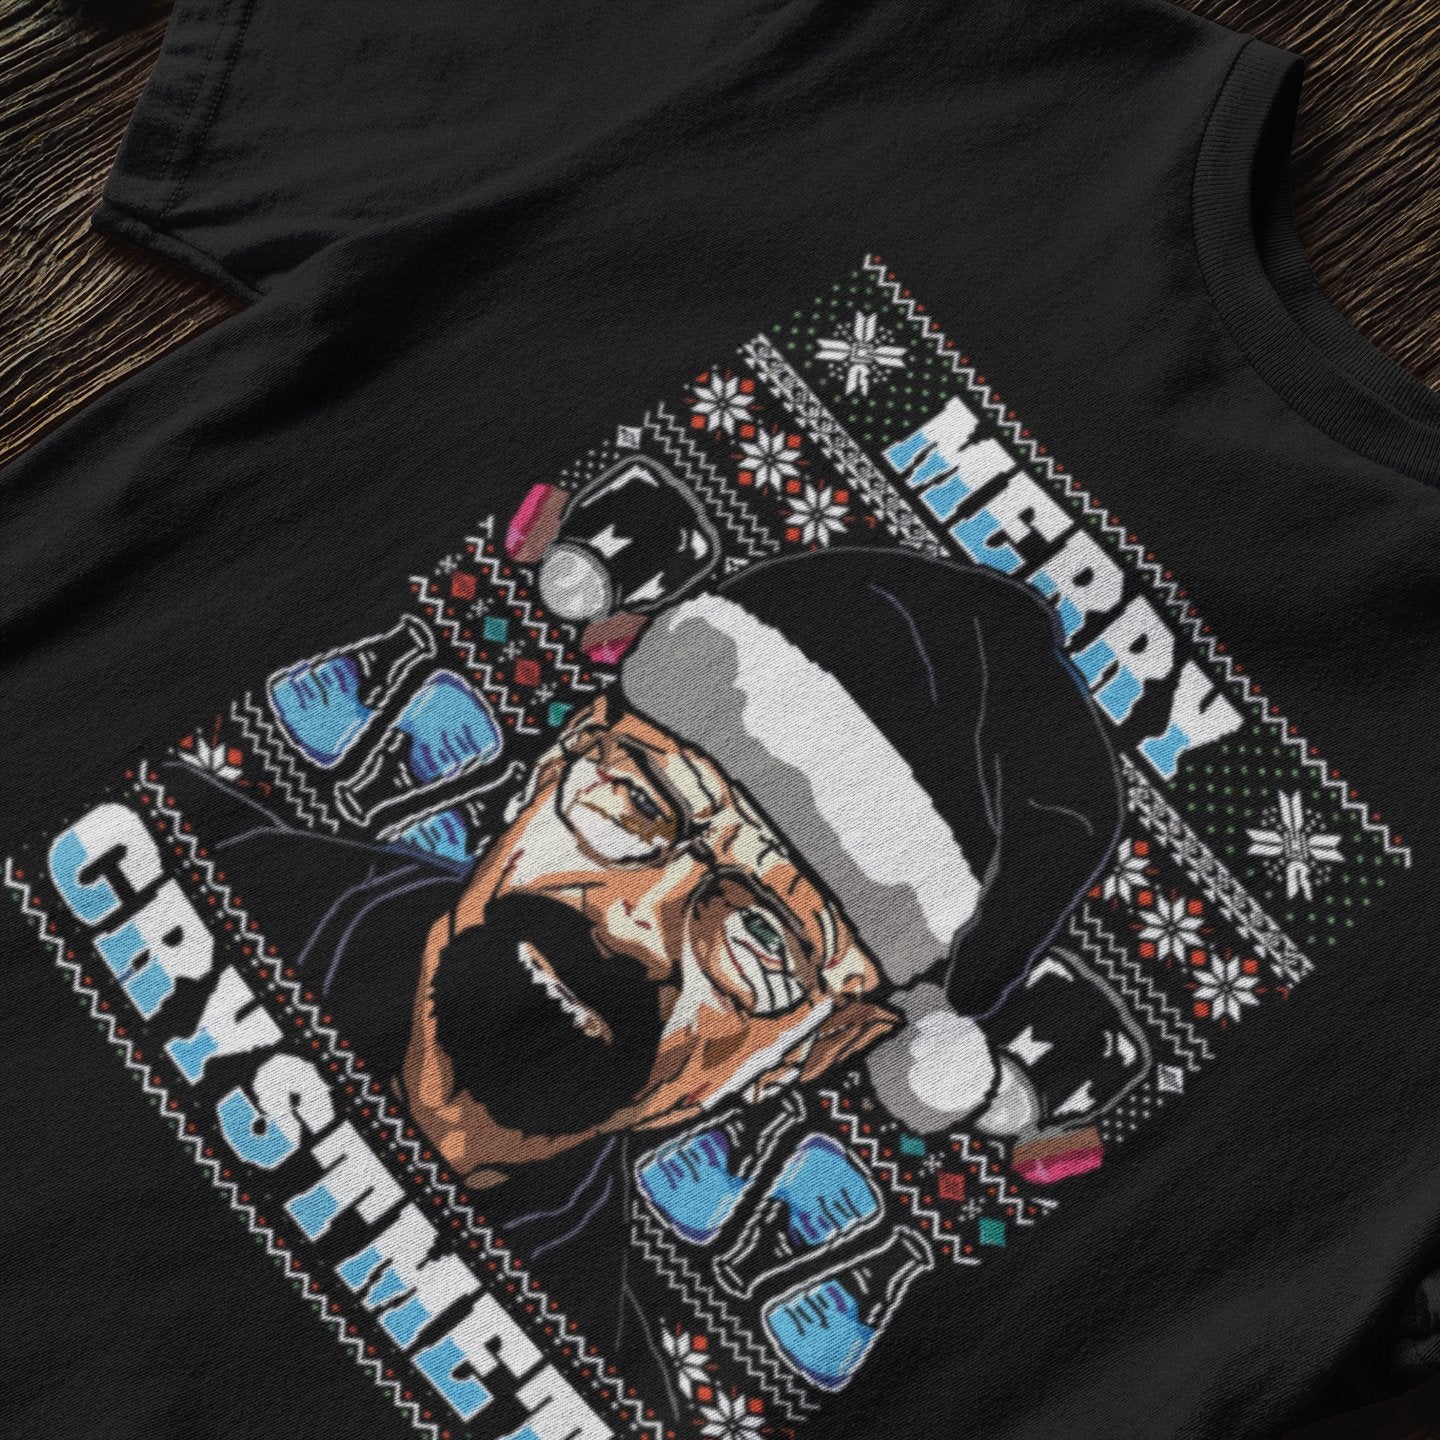 Merry Crystmeth Breaking Bad - T-Shirt